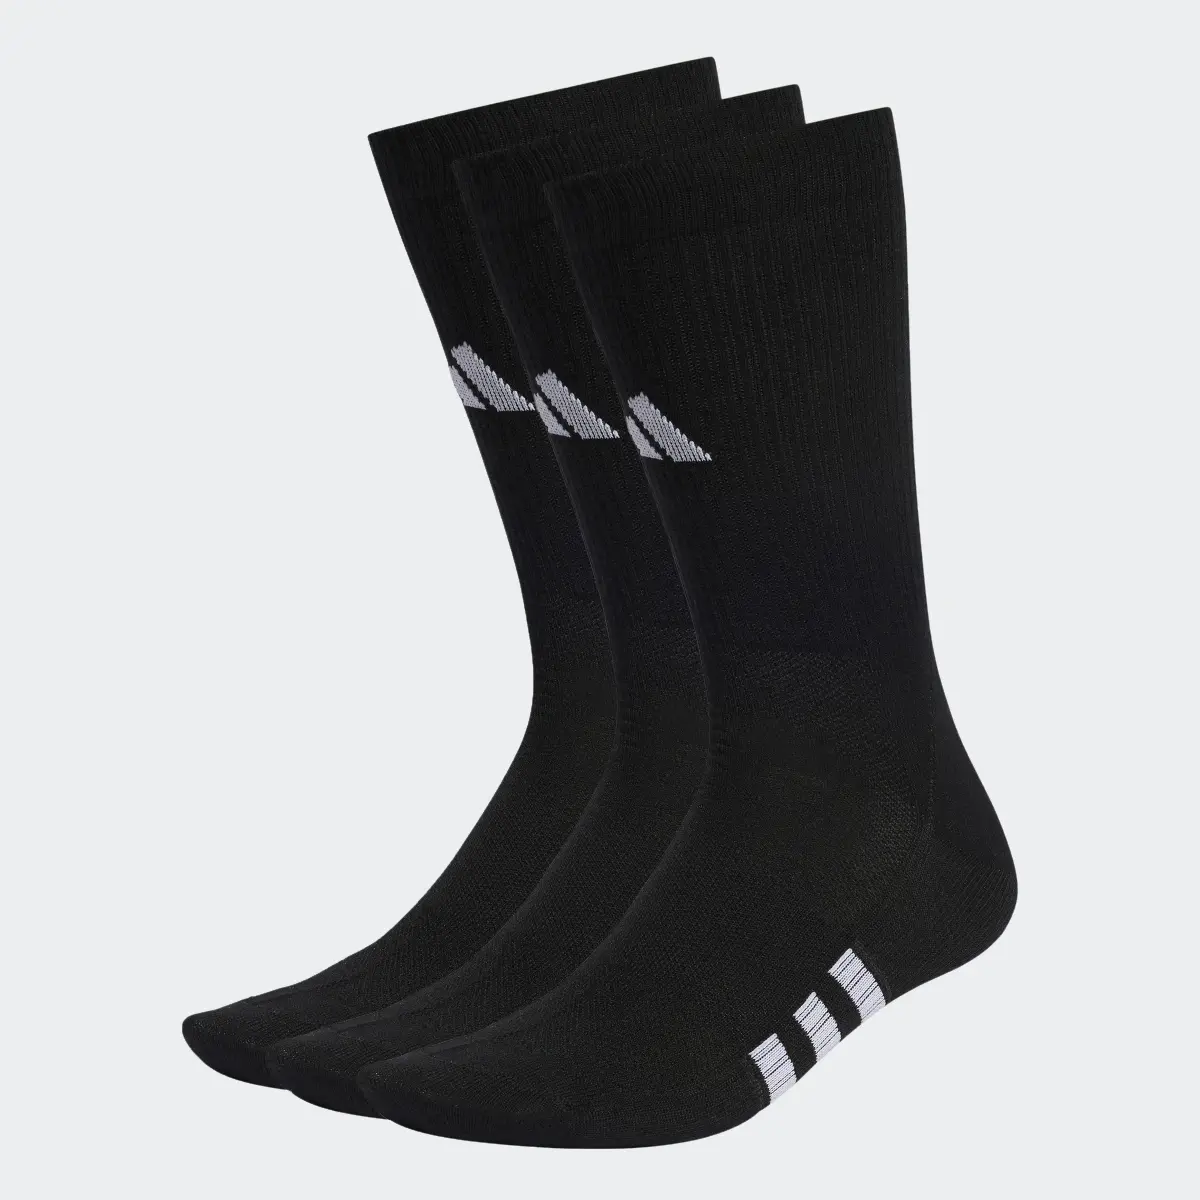 Adidas Performance Light Crew Socks 3 Pairs. 1